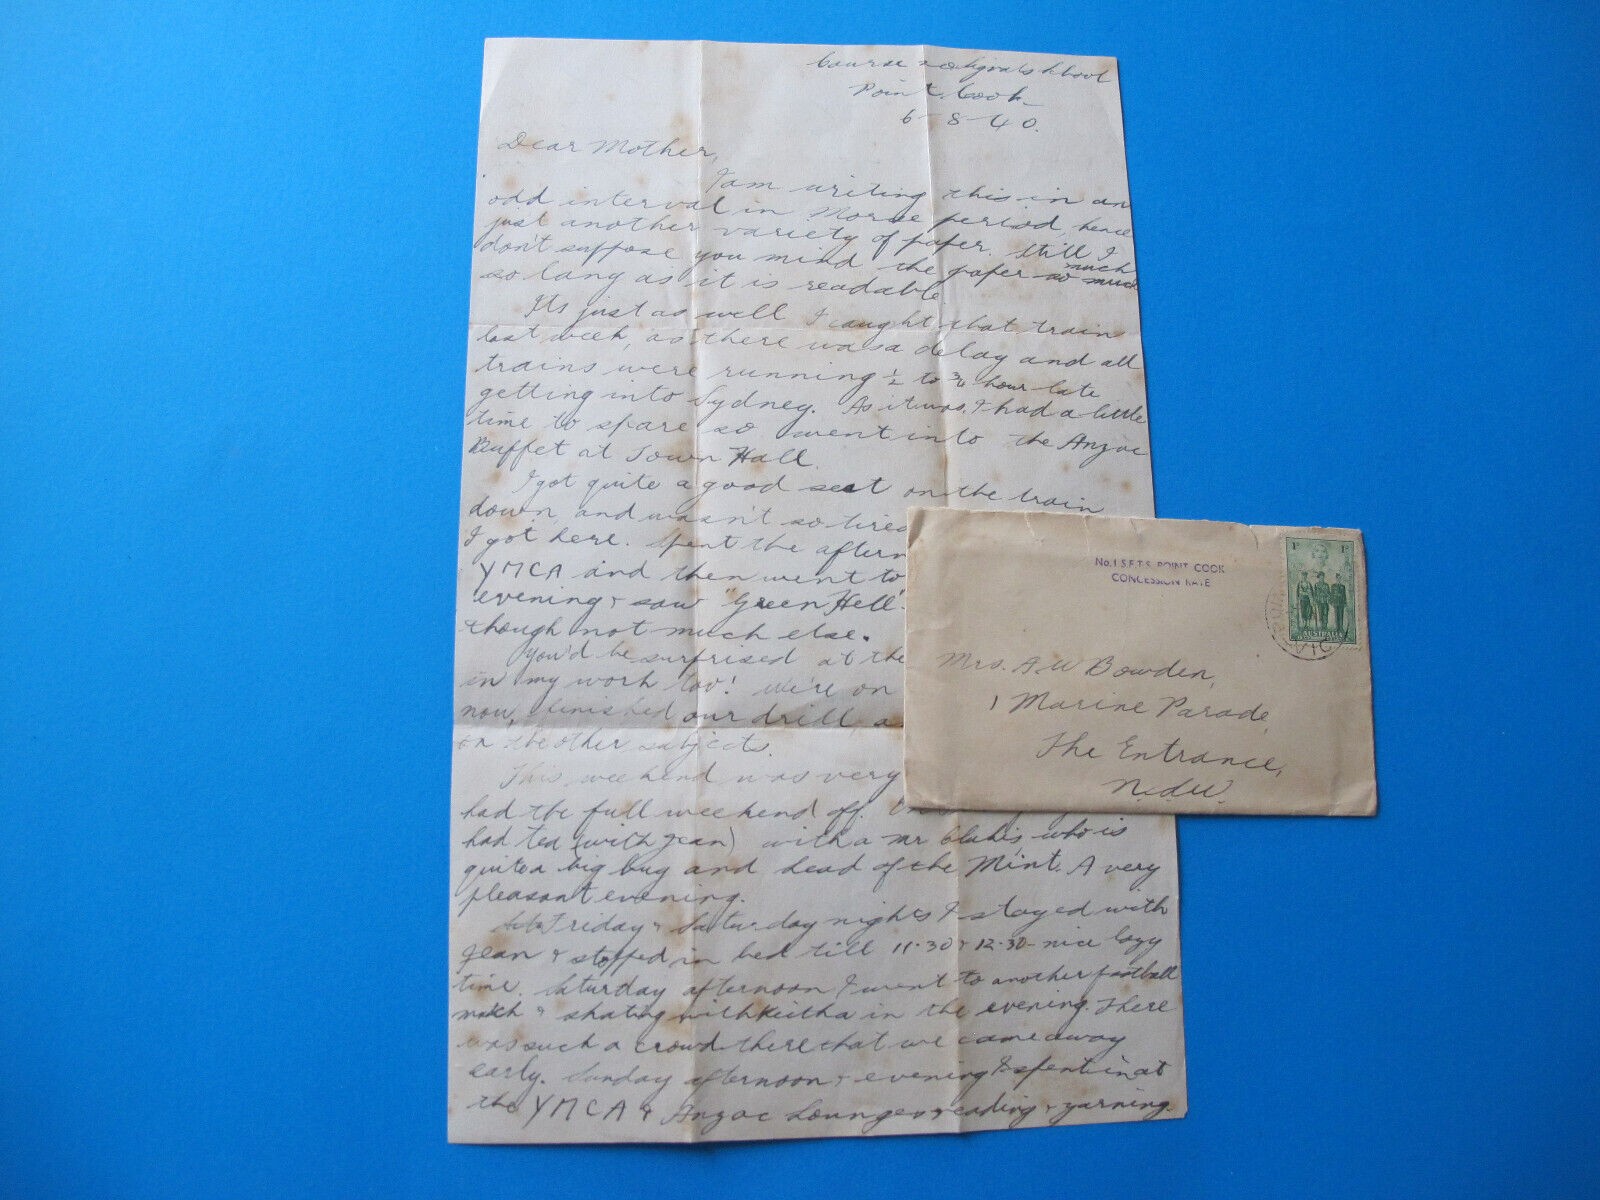 Course 20 Signals School RAAF Station Letter from WW2 RAAF Sgt John Ralph Bowen